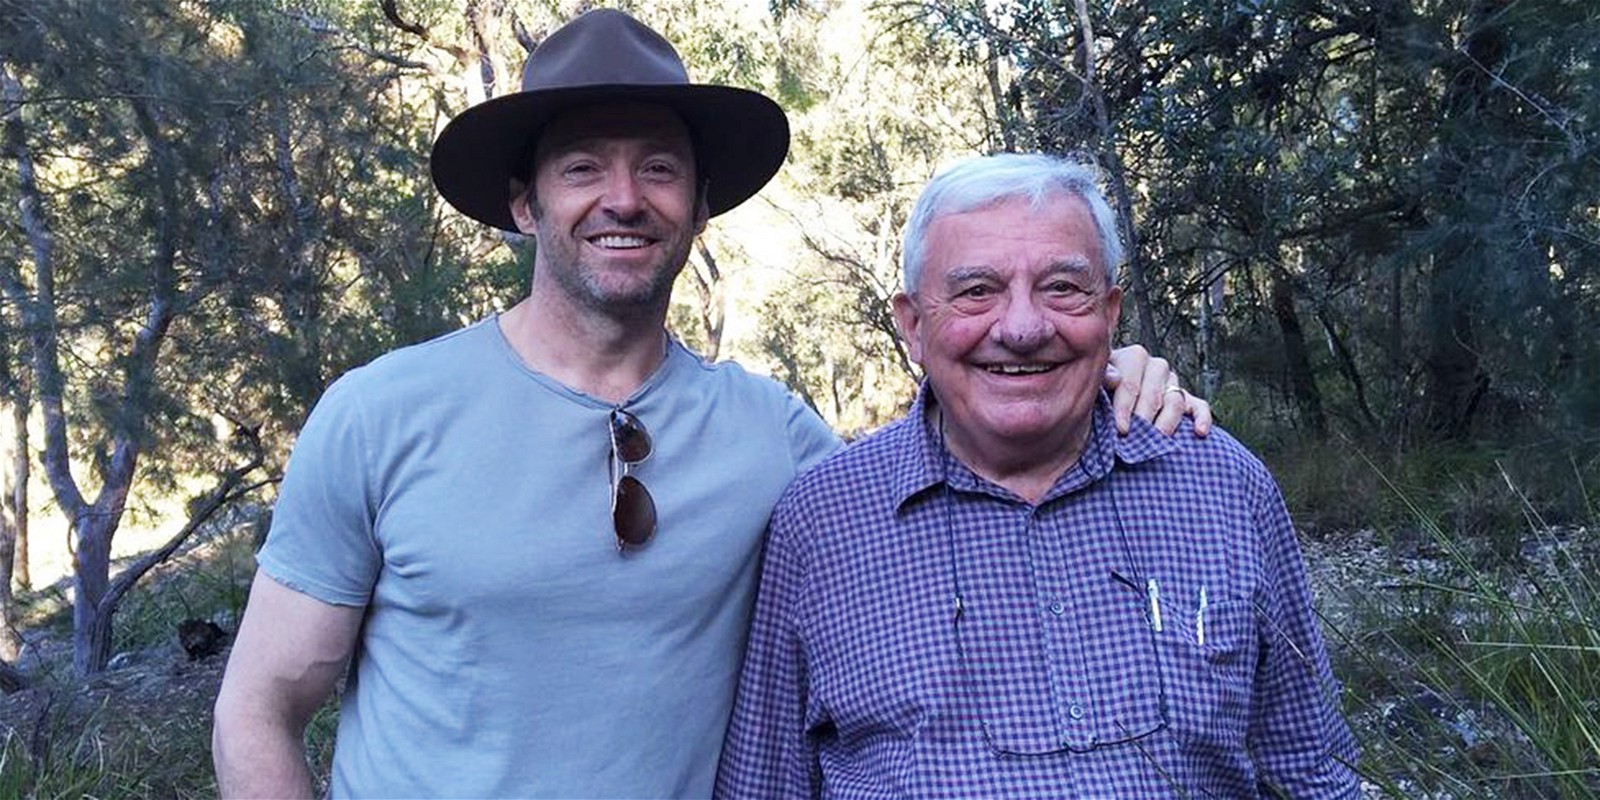 Hugh Jackman and his father Christopher Jackman